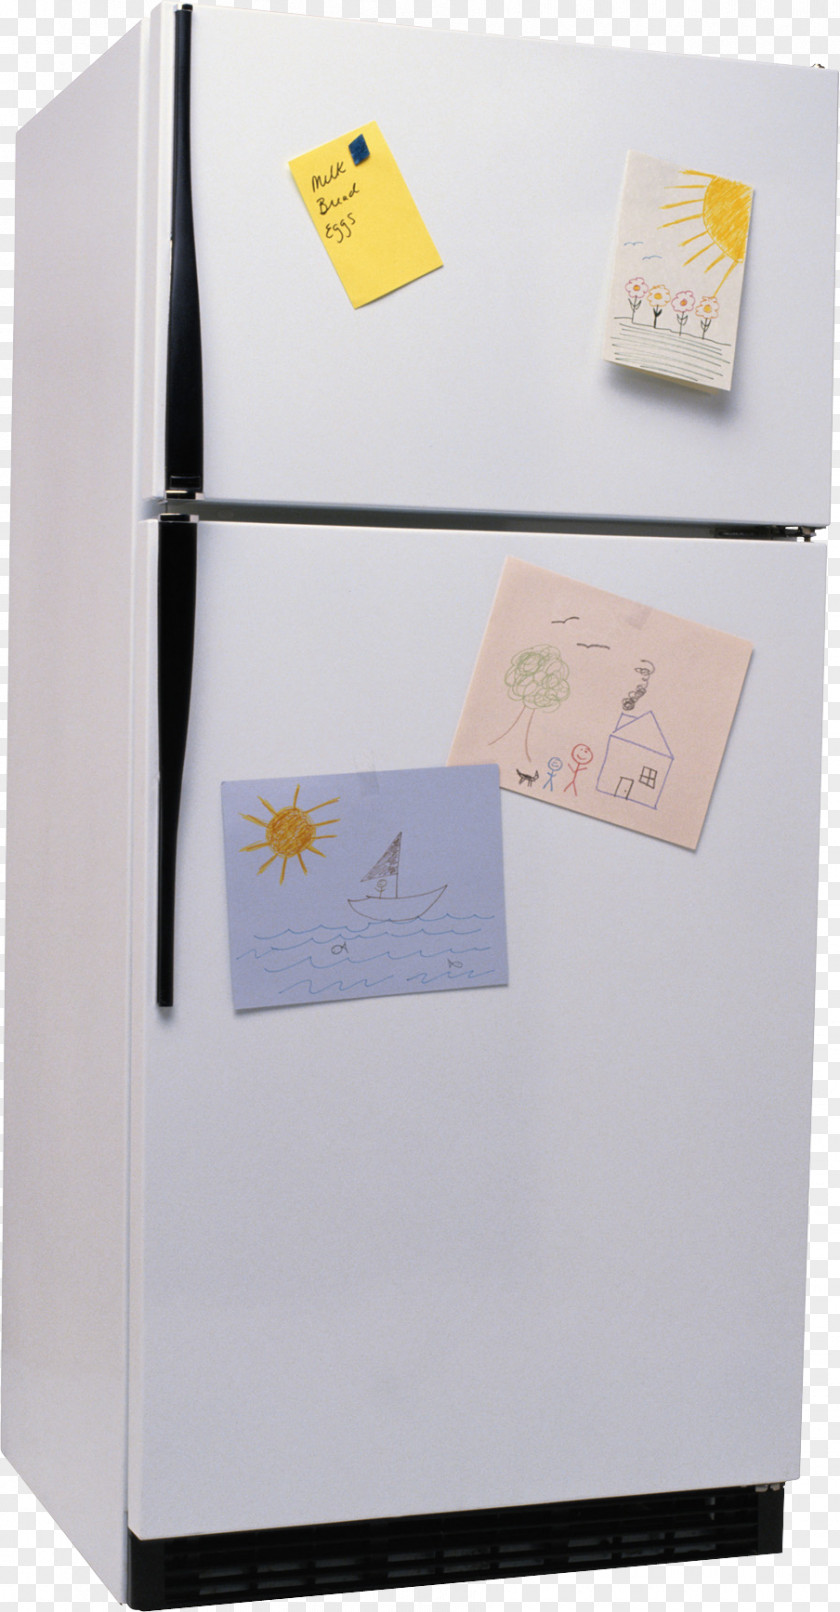 Refrigerator Home Appliance Kitchen Clip Art PNG